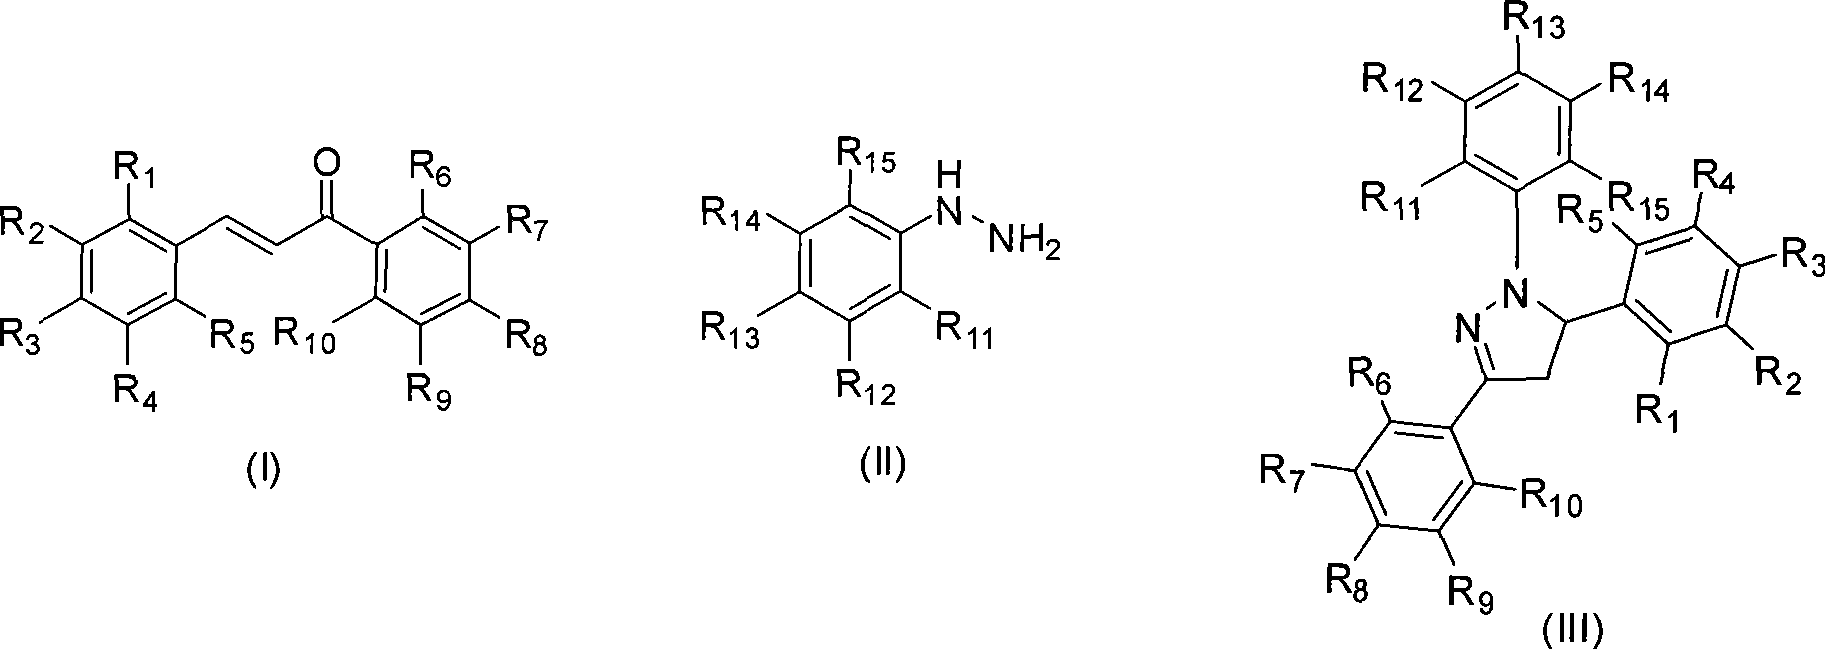 Mechanochemical preparation of 1,3,5-triaryl-2-pyrazoline compounds